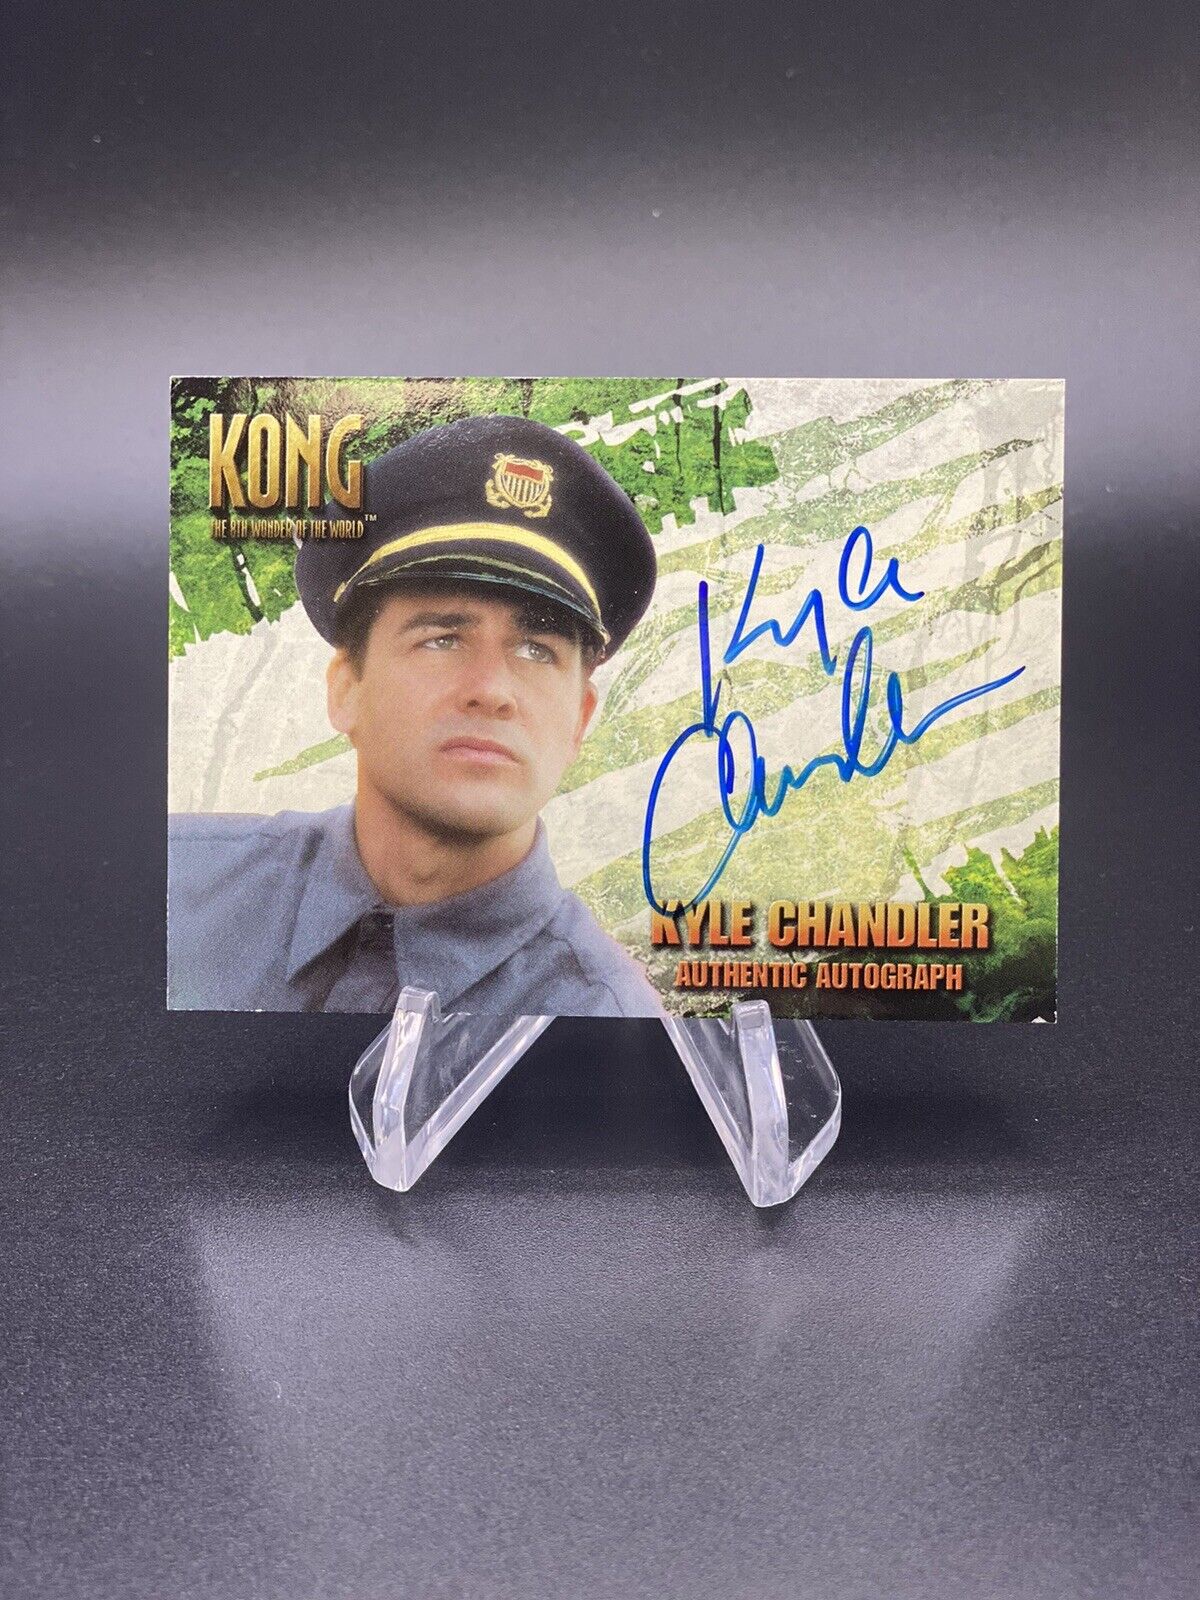 Kyle Chandler as Bruce Baxter Topps KONG 8th Wonder of The World Autograph Card